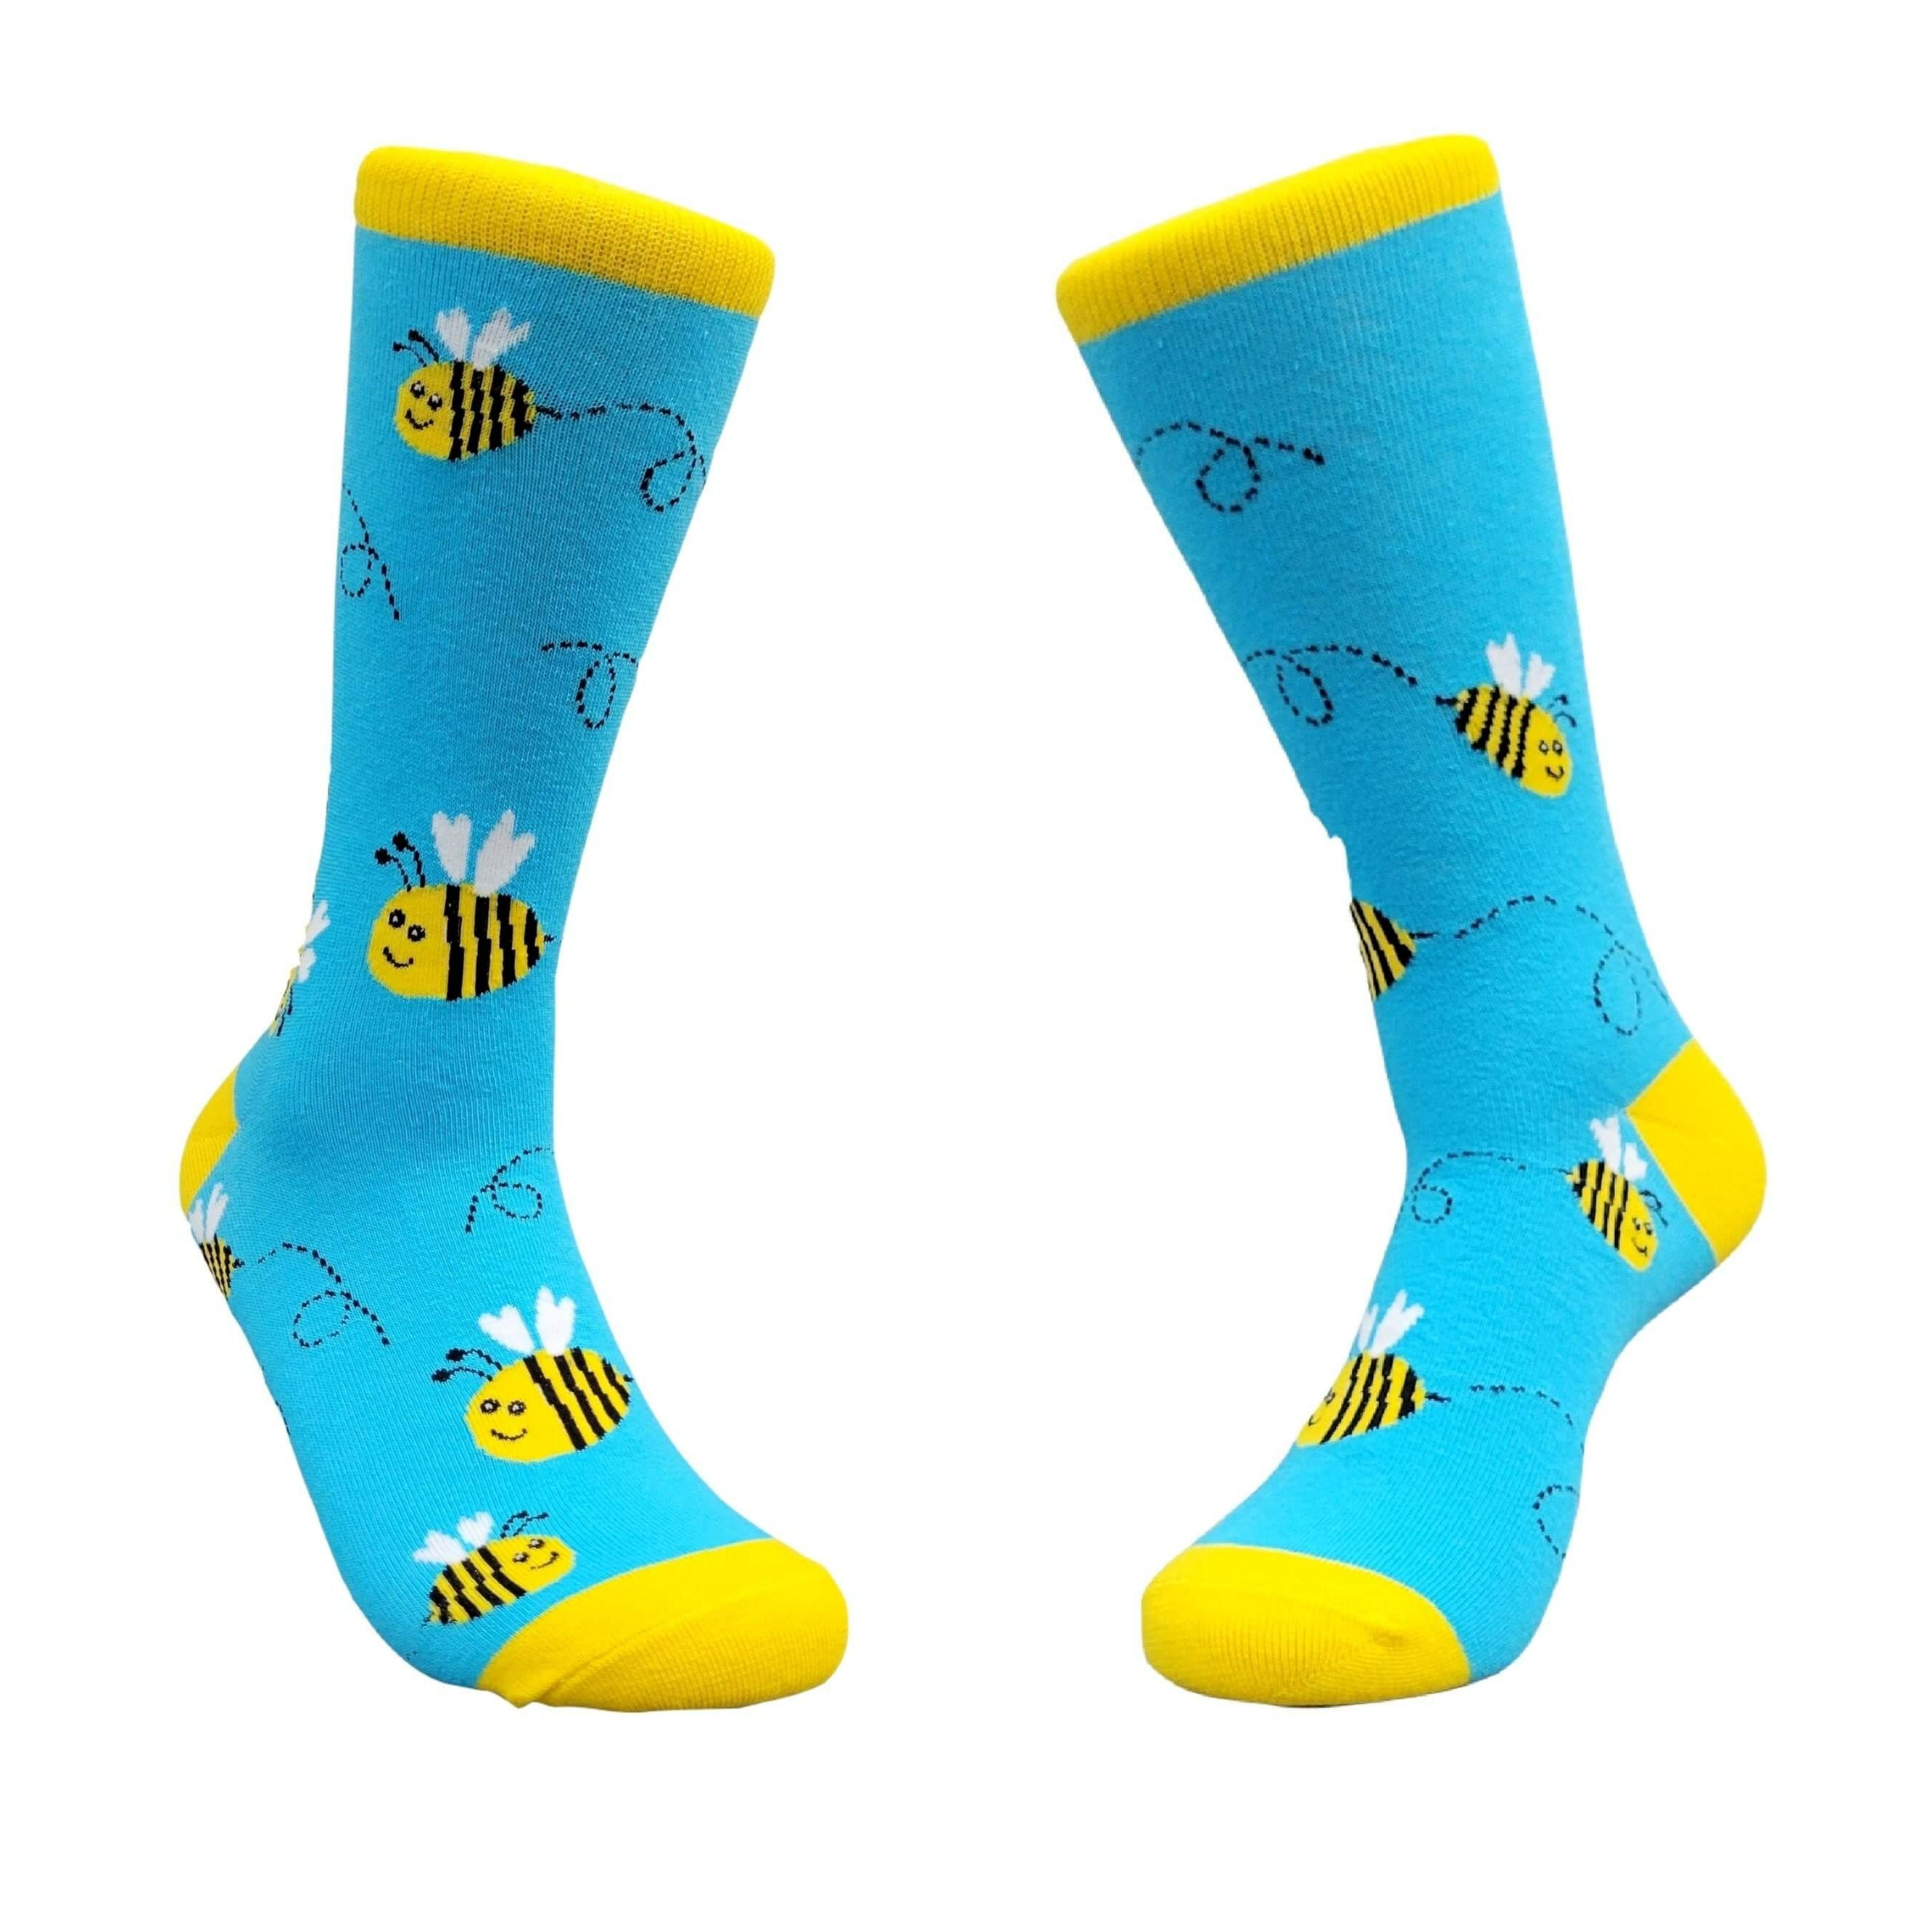 Buzz Like A Bee Socks from the Sock Panda